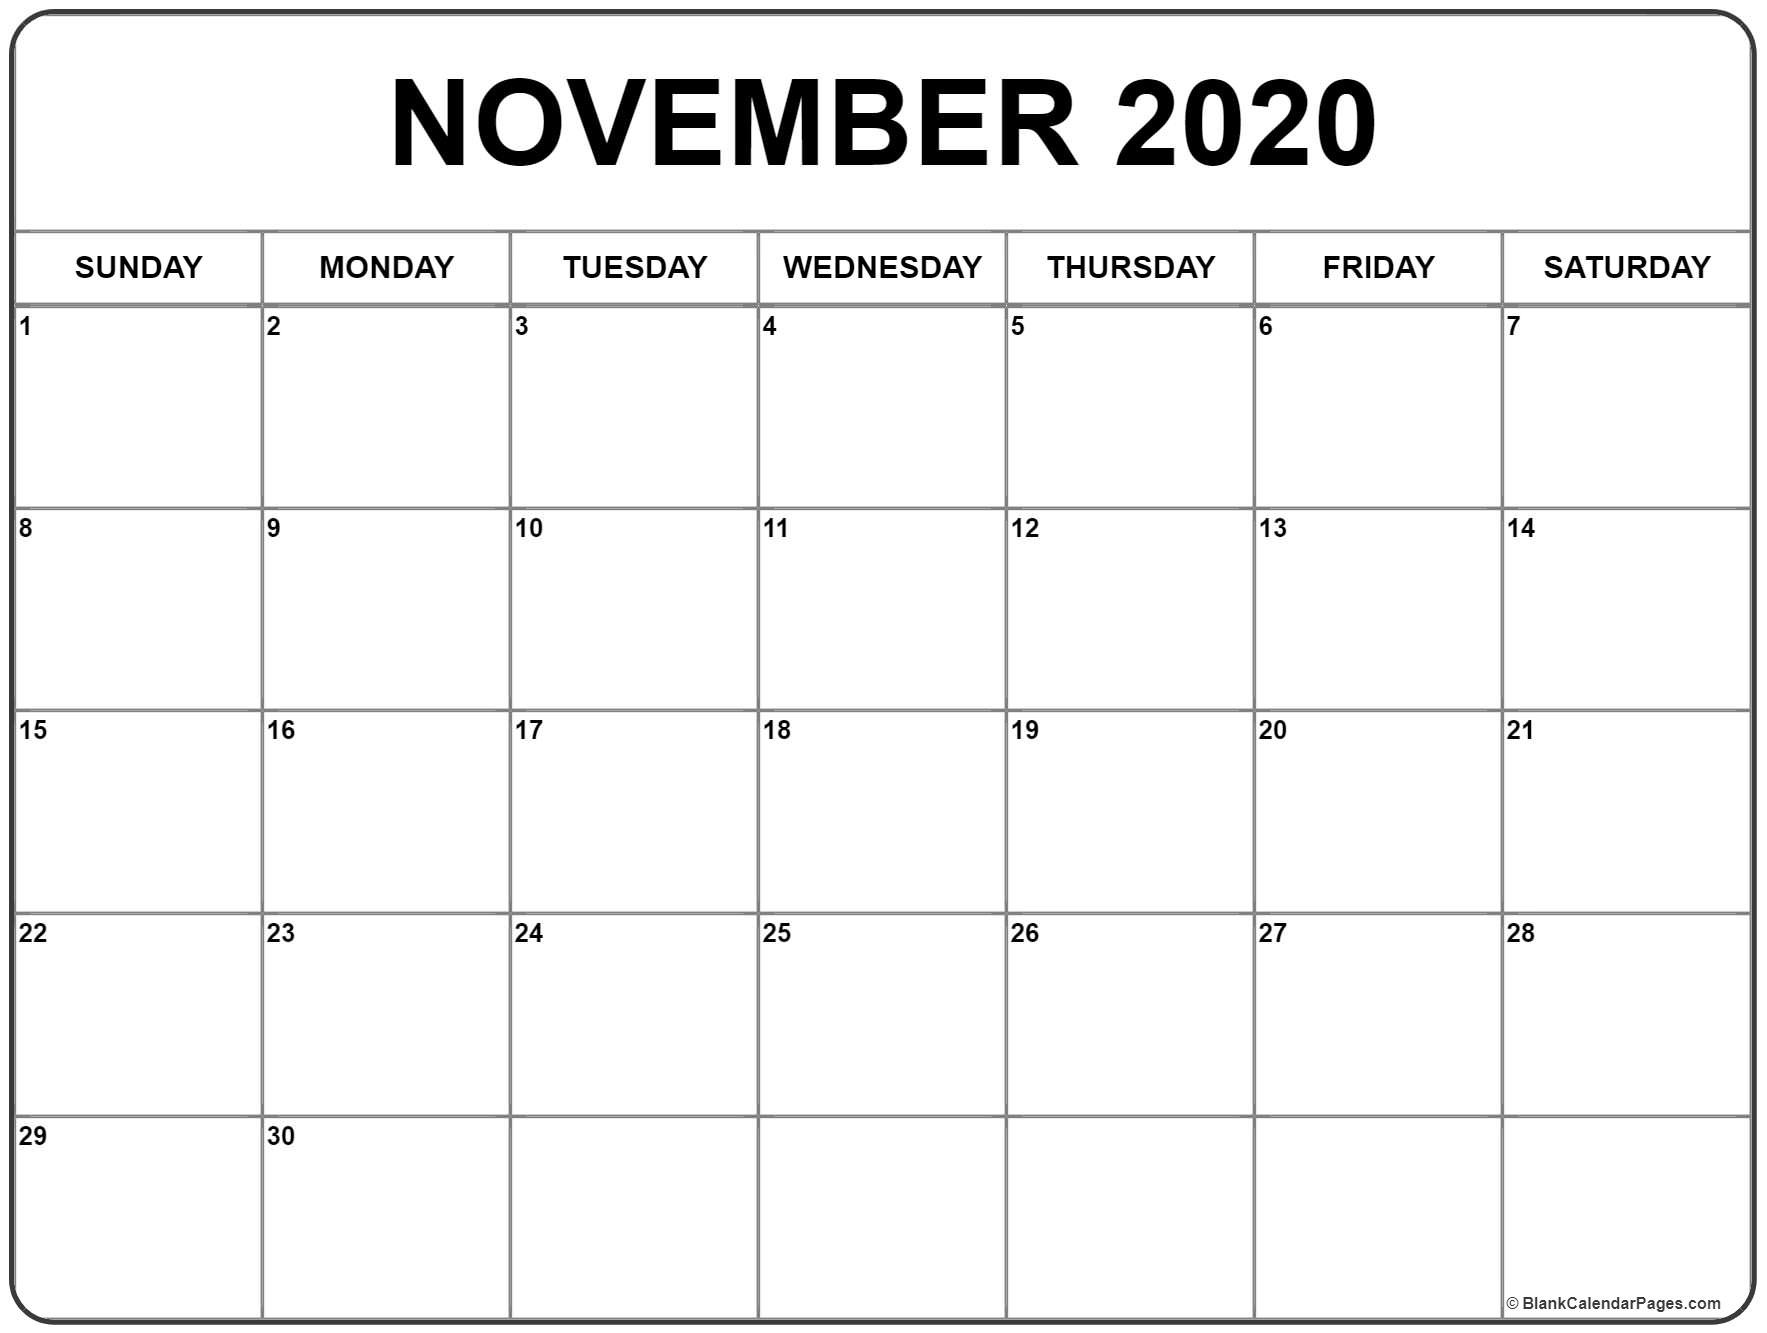 CAL=November 2020 calendar